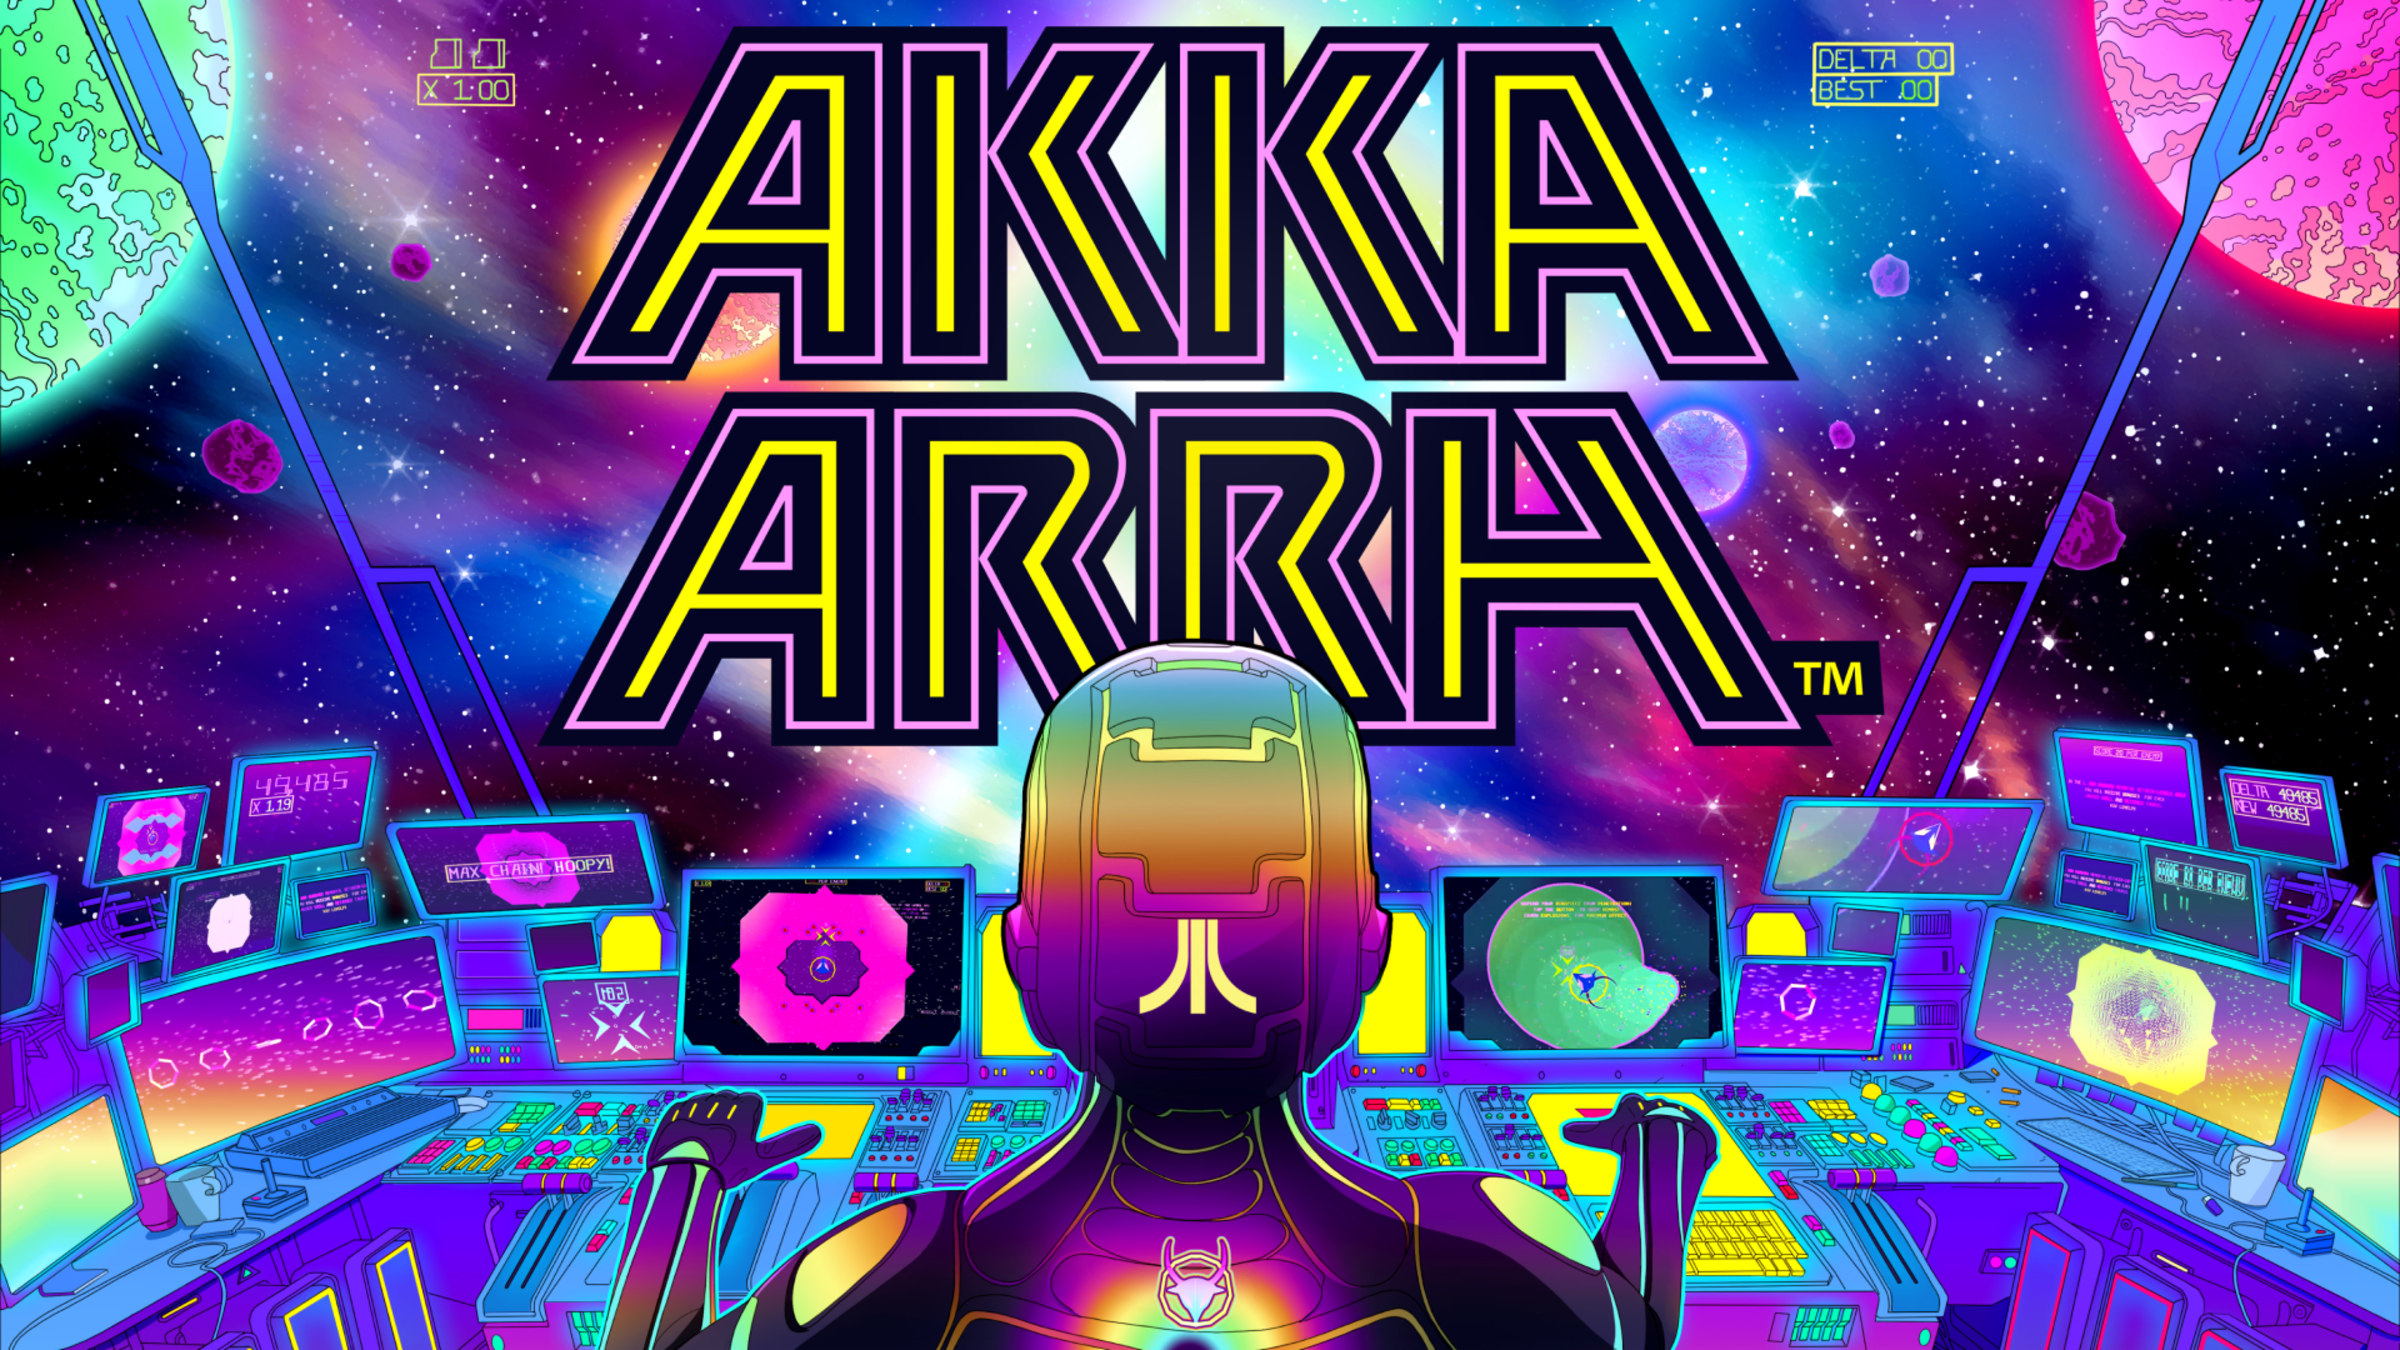 Akka Arrh Apk Mobile Android Version Full Game Setup Free Download